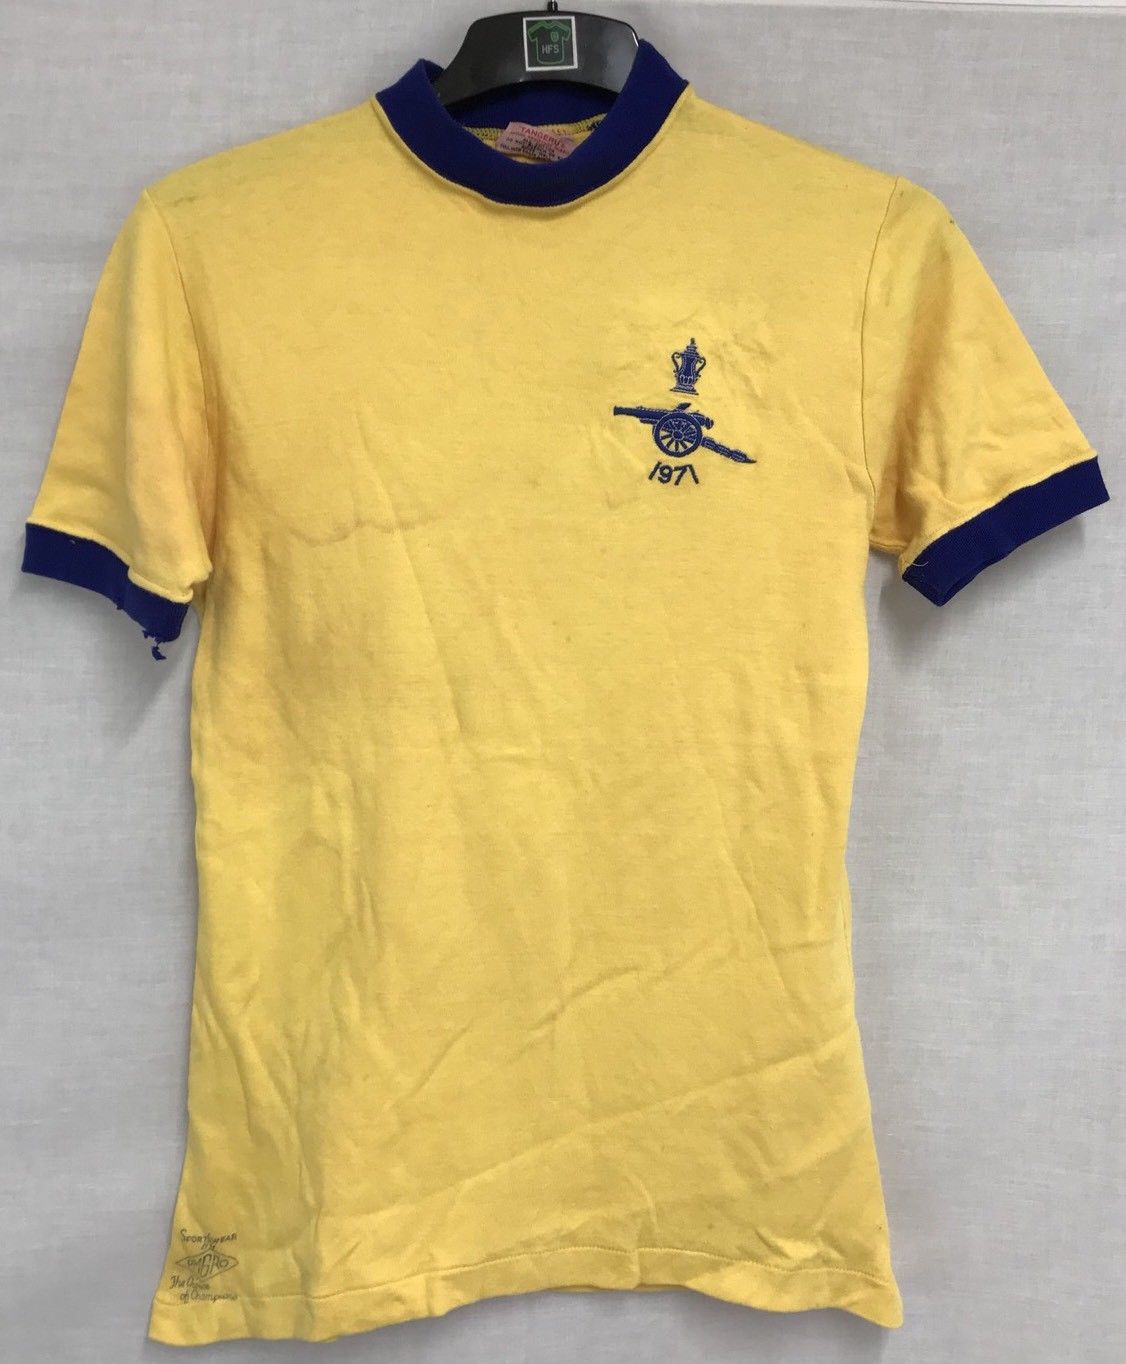 1971 arsenal shirt